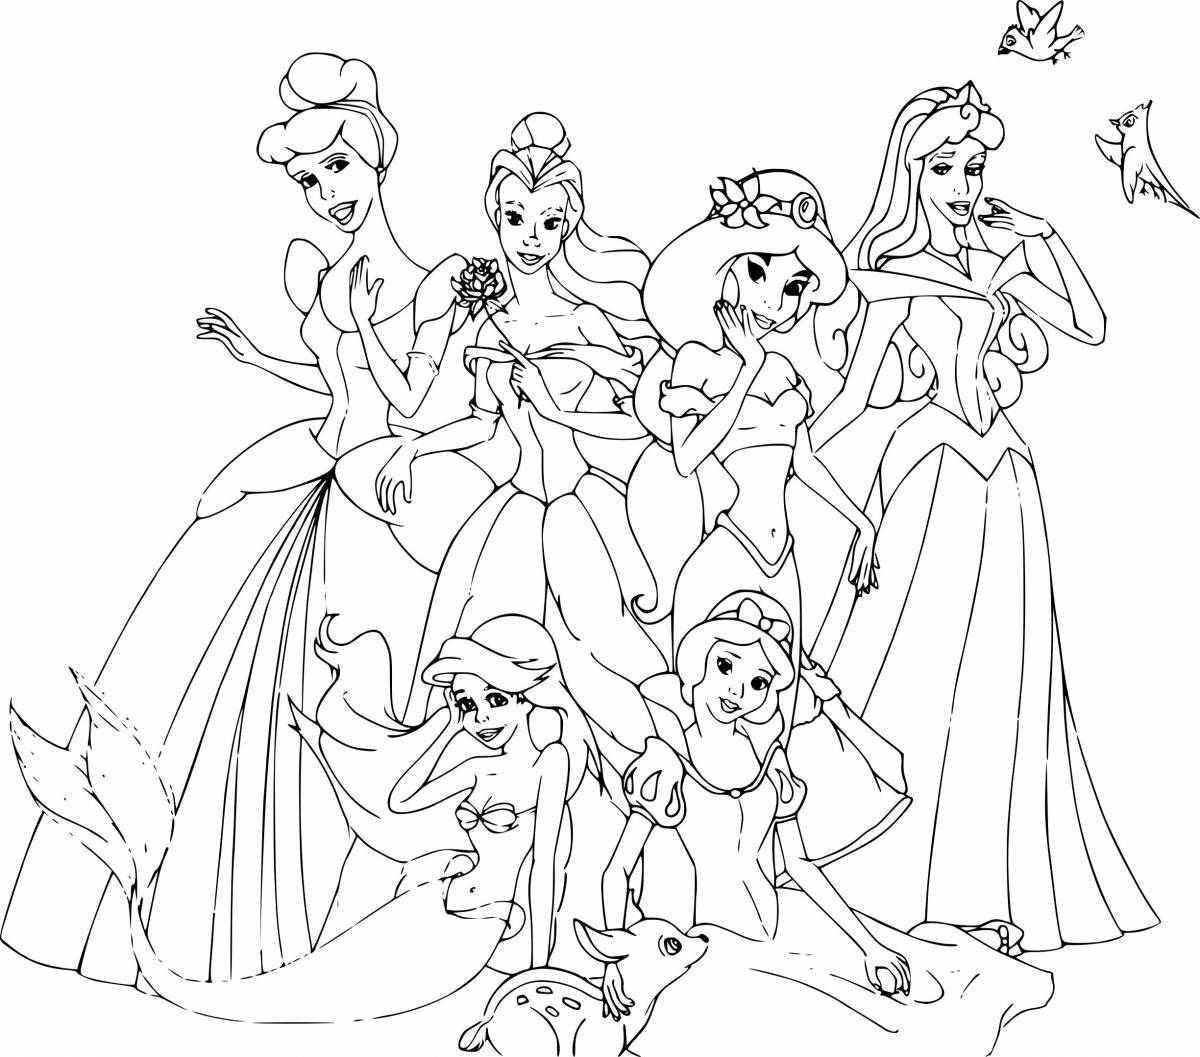 Fine coloring of all Disney princesses